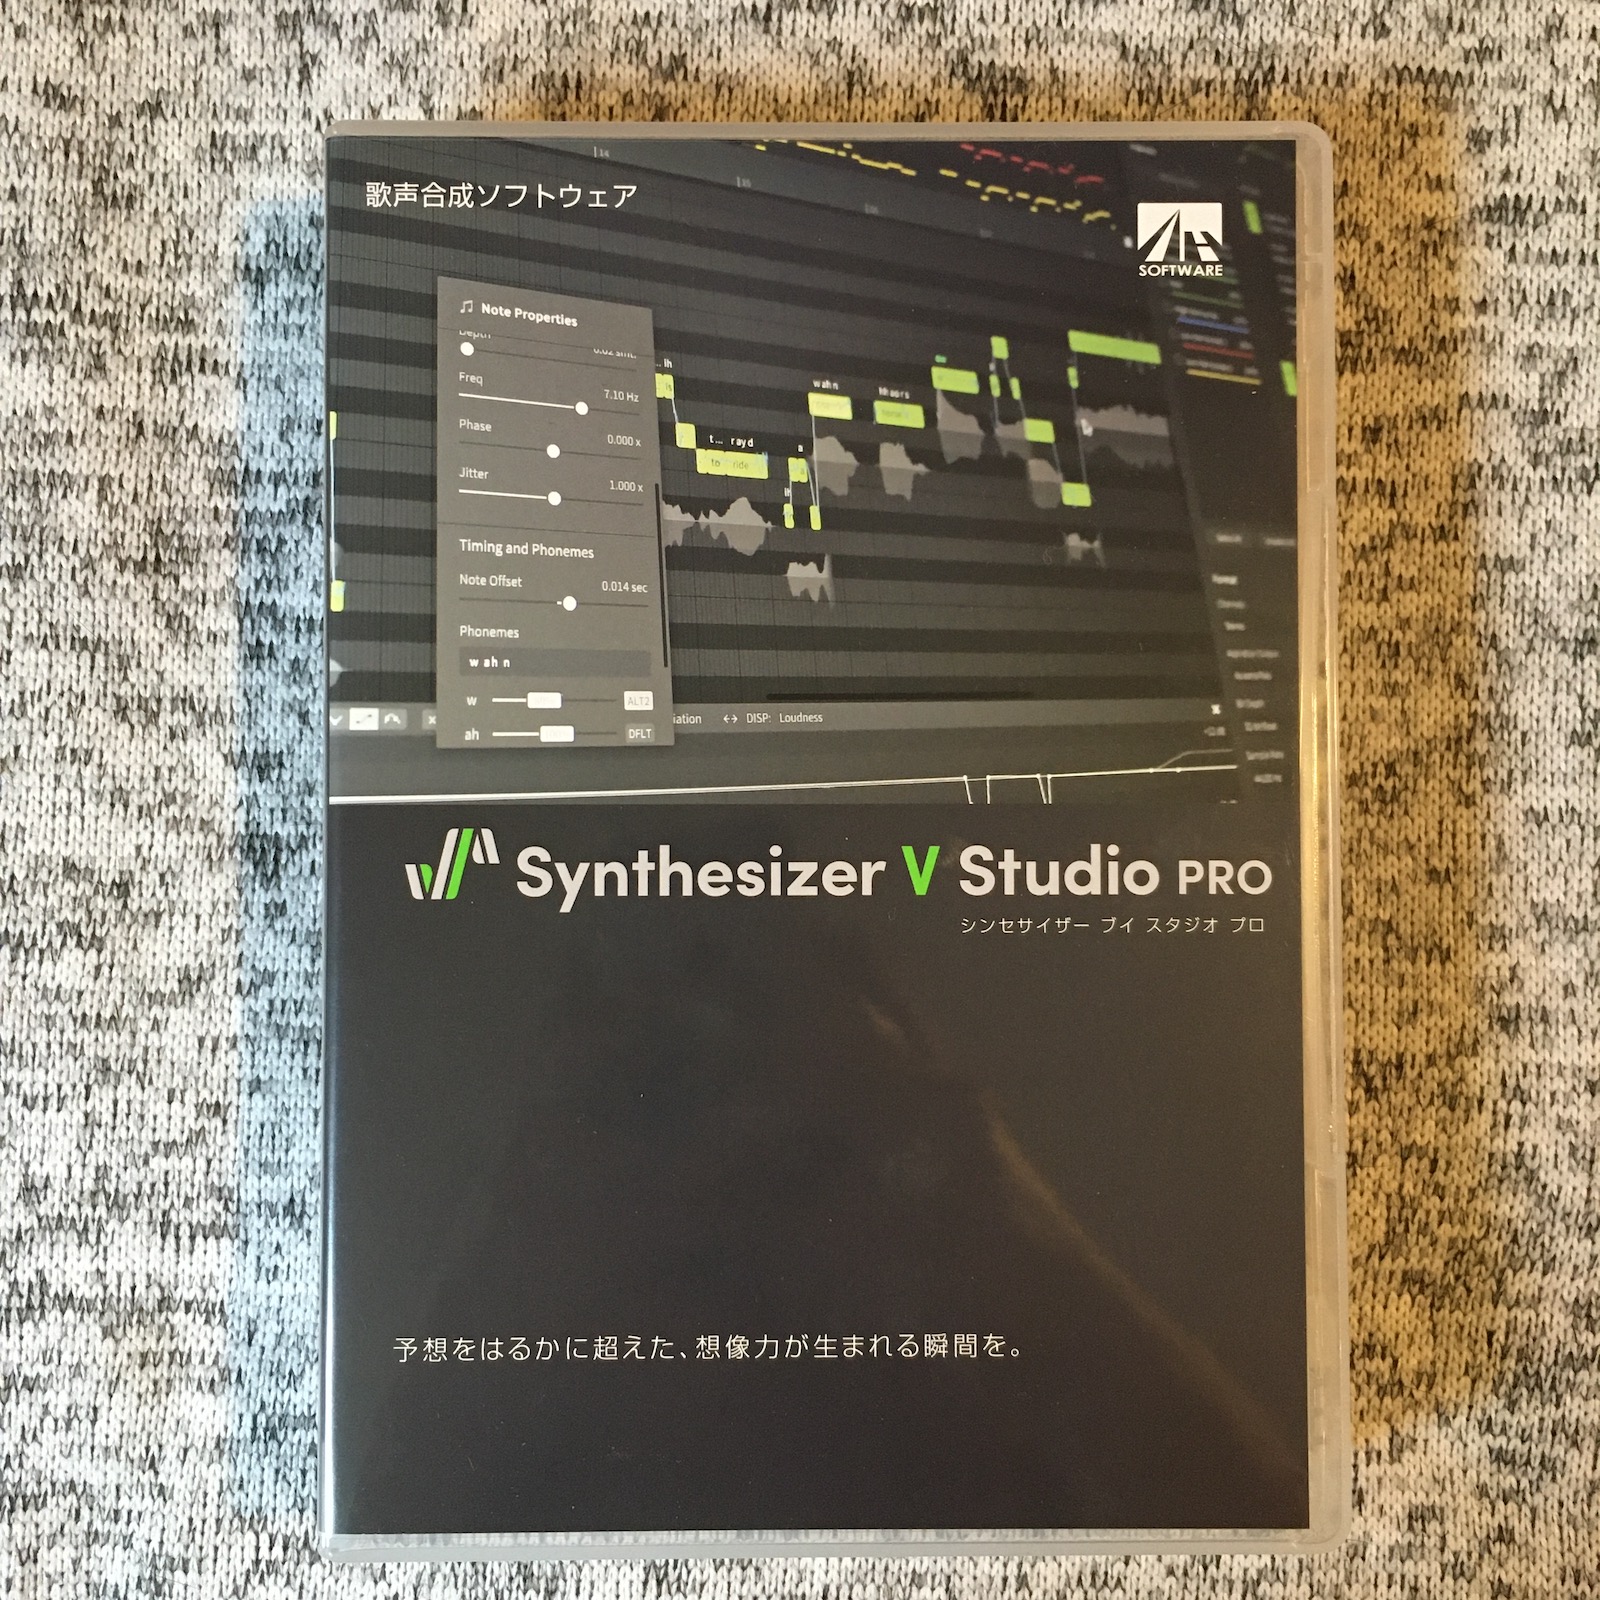 Synthesizer V Pro box.